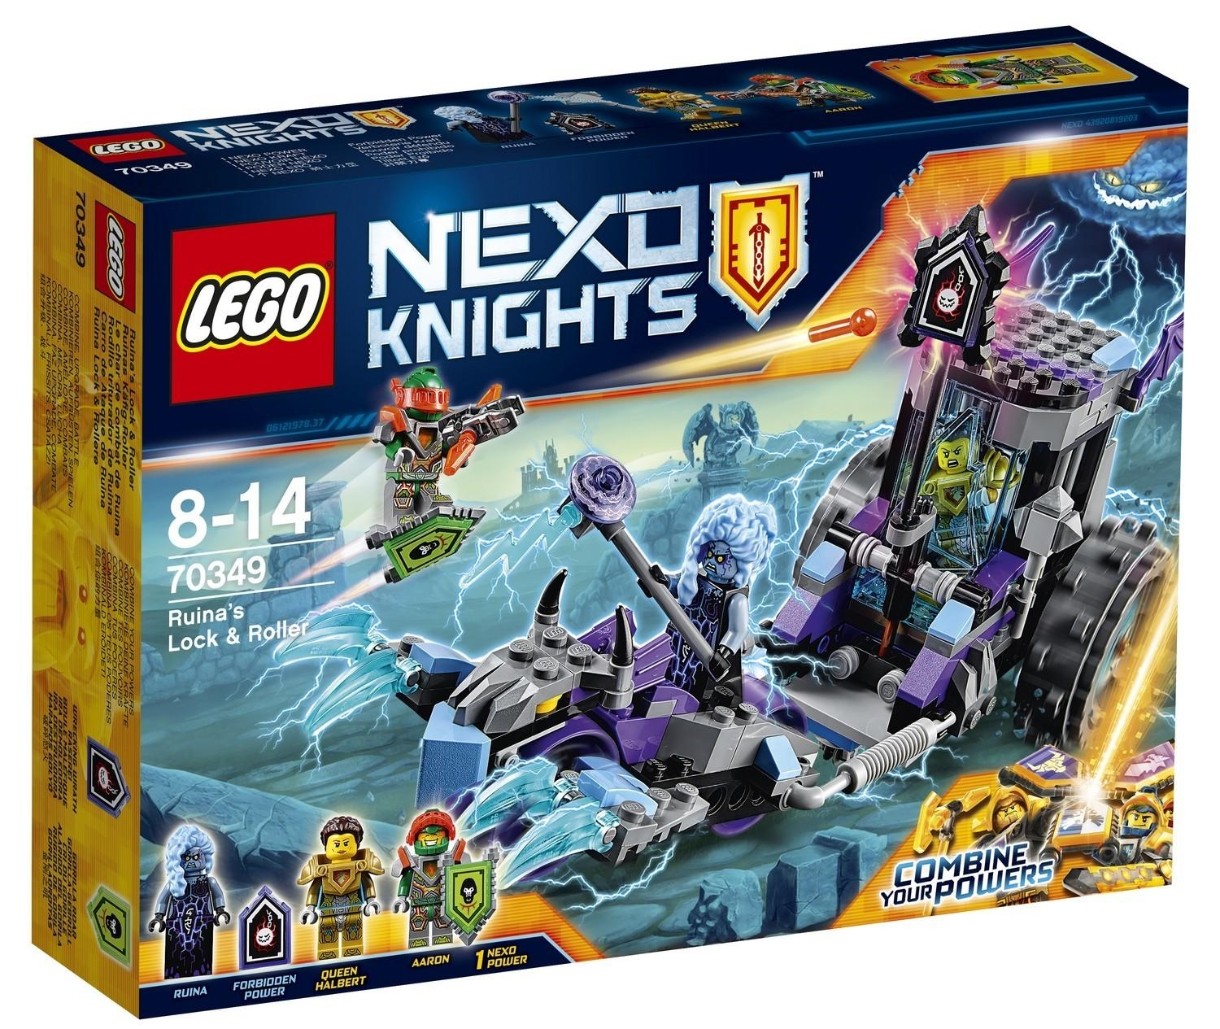 Set de construcție Lego Nexo Knights: Ruina's Lock & Roller (70349)